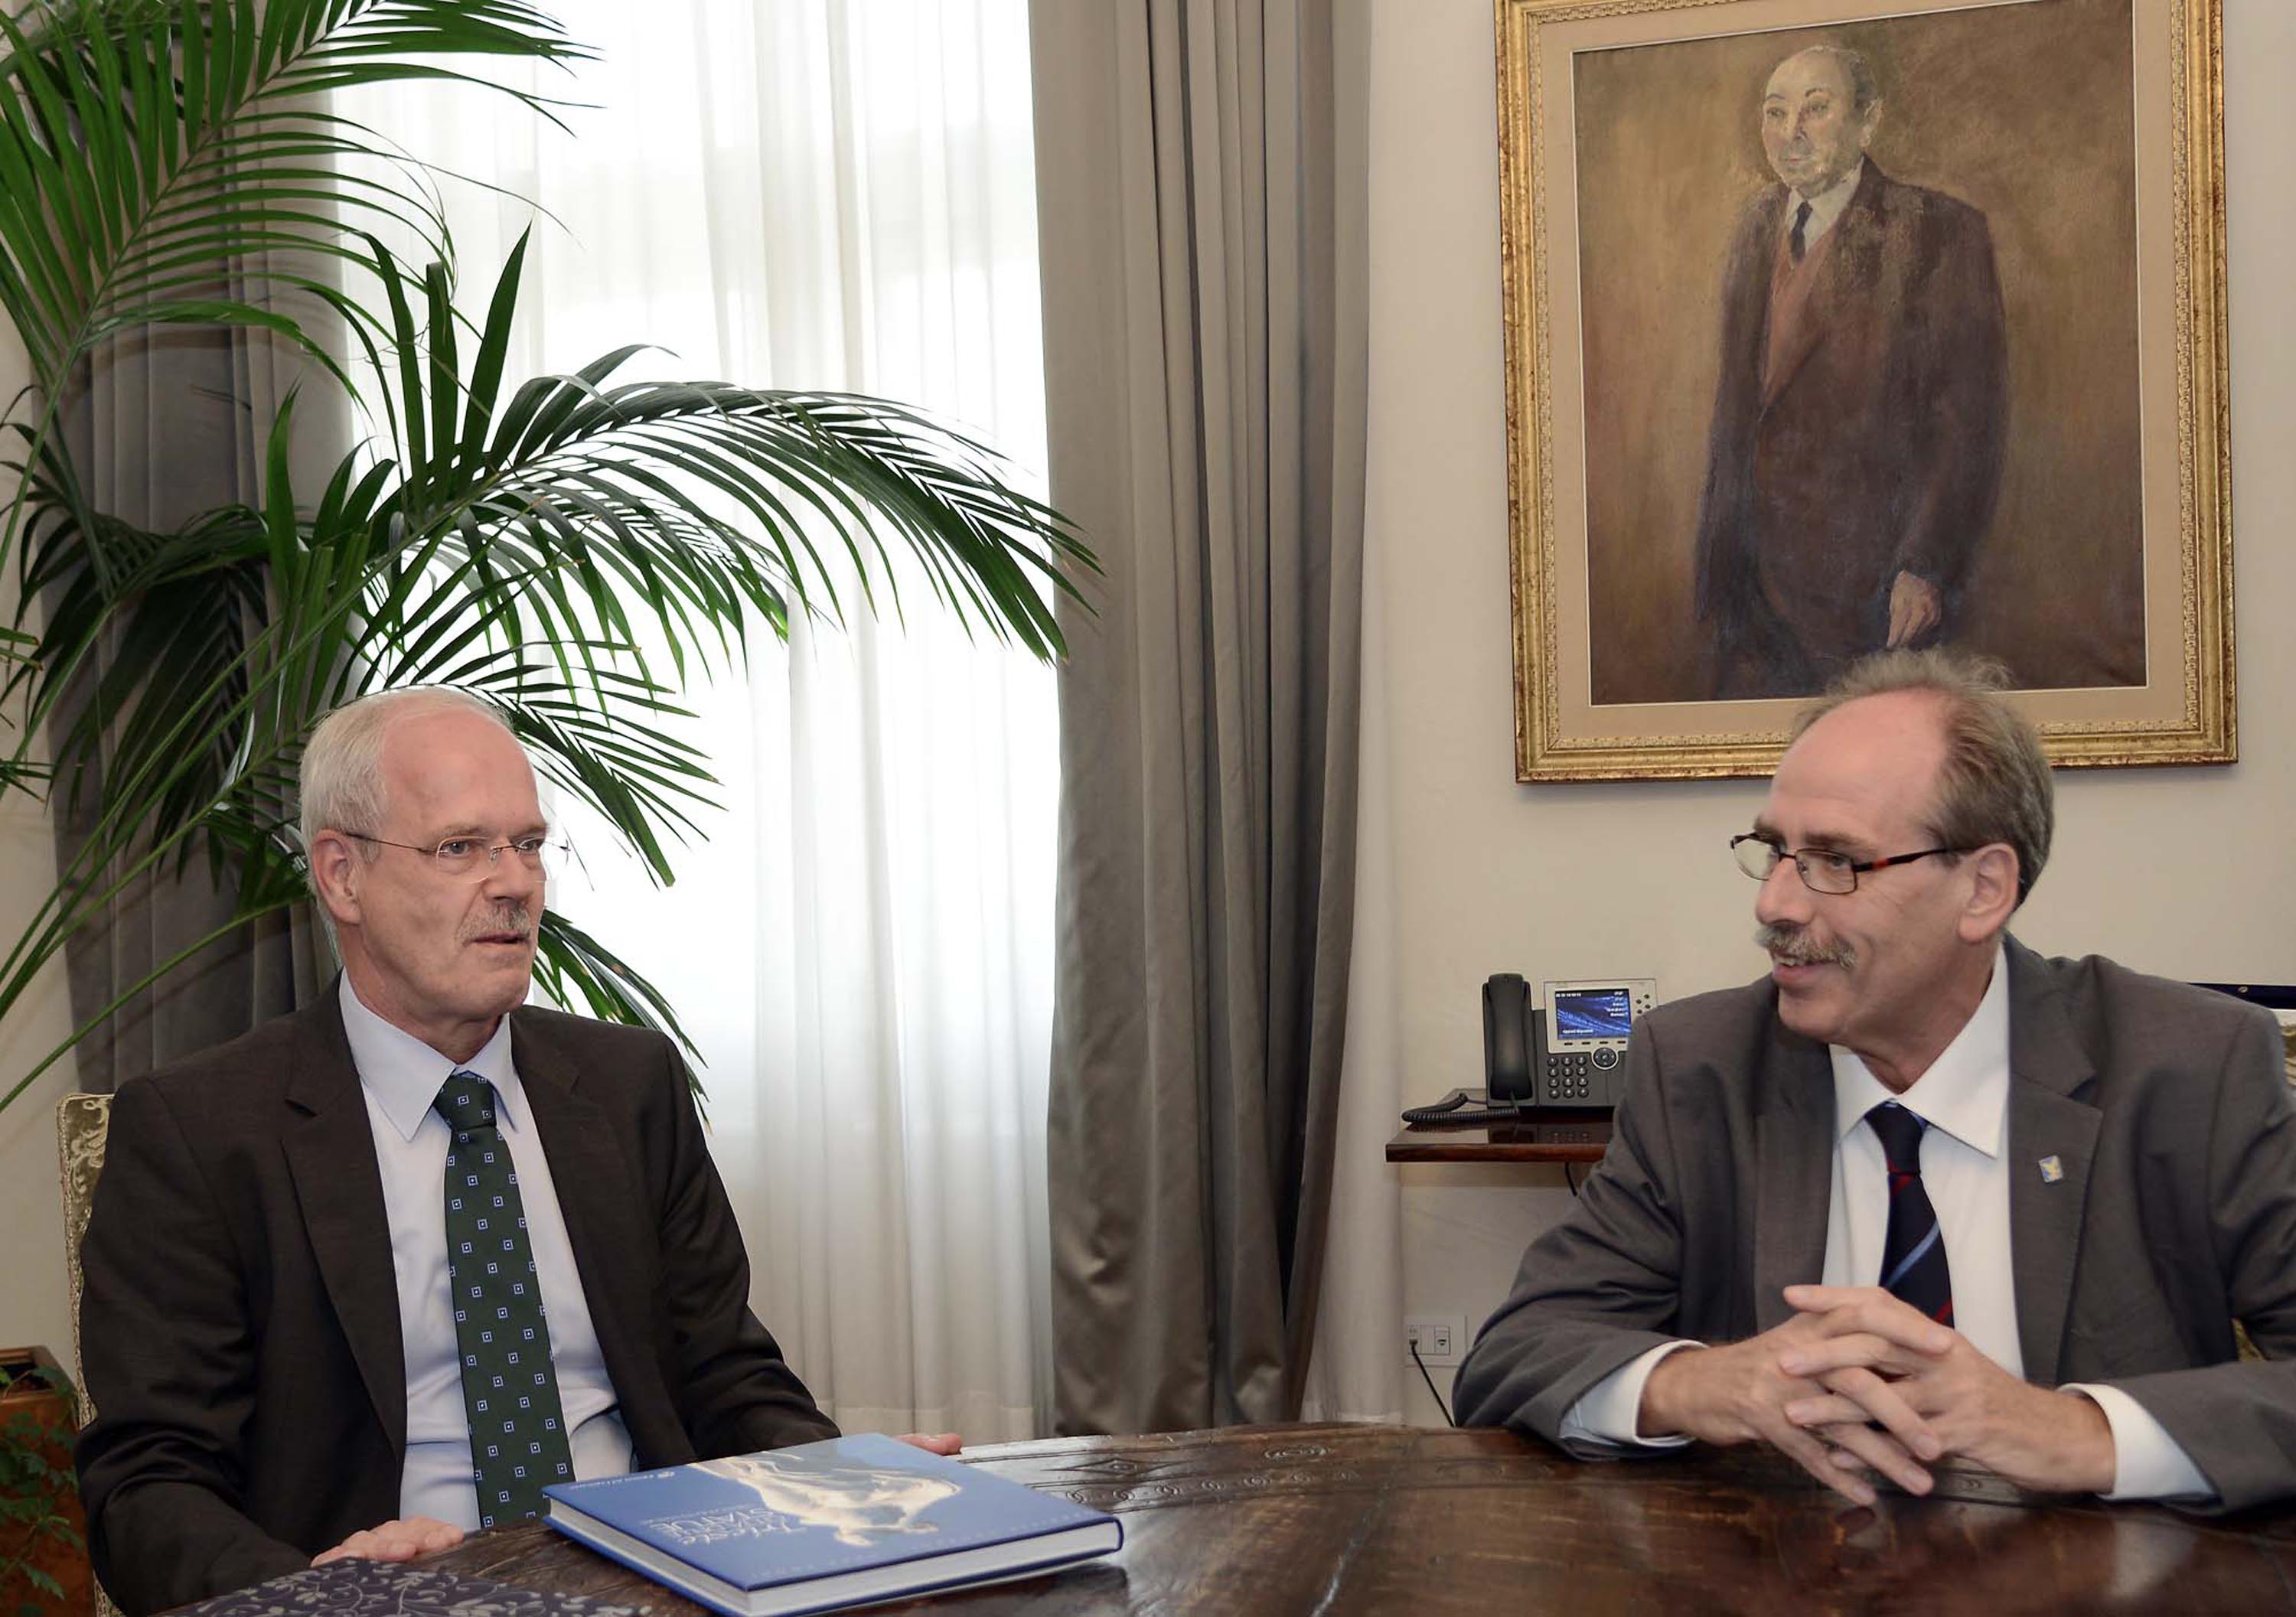 Peter Dettmar (Console generale di Germania a Milano) e Gianni Torrenti (Assessore regionale Cultura, Sport e Solidarietà) nella sede della Regione. (Trieste 14/10/13)